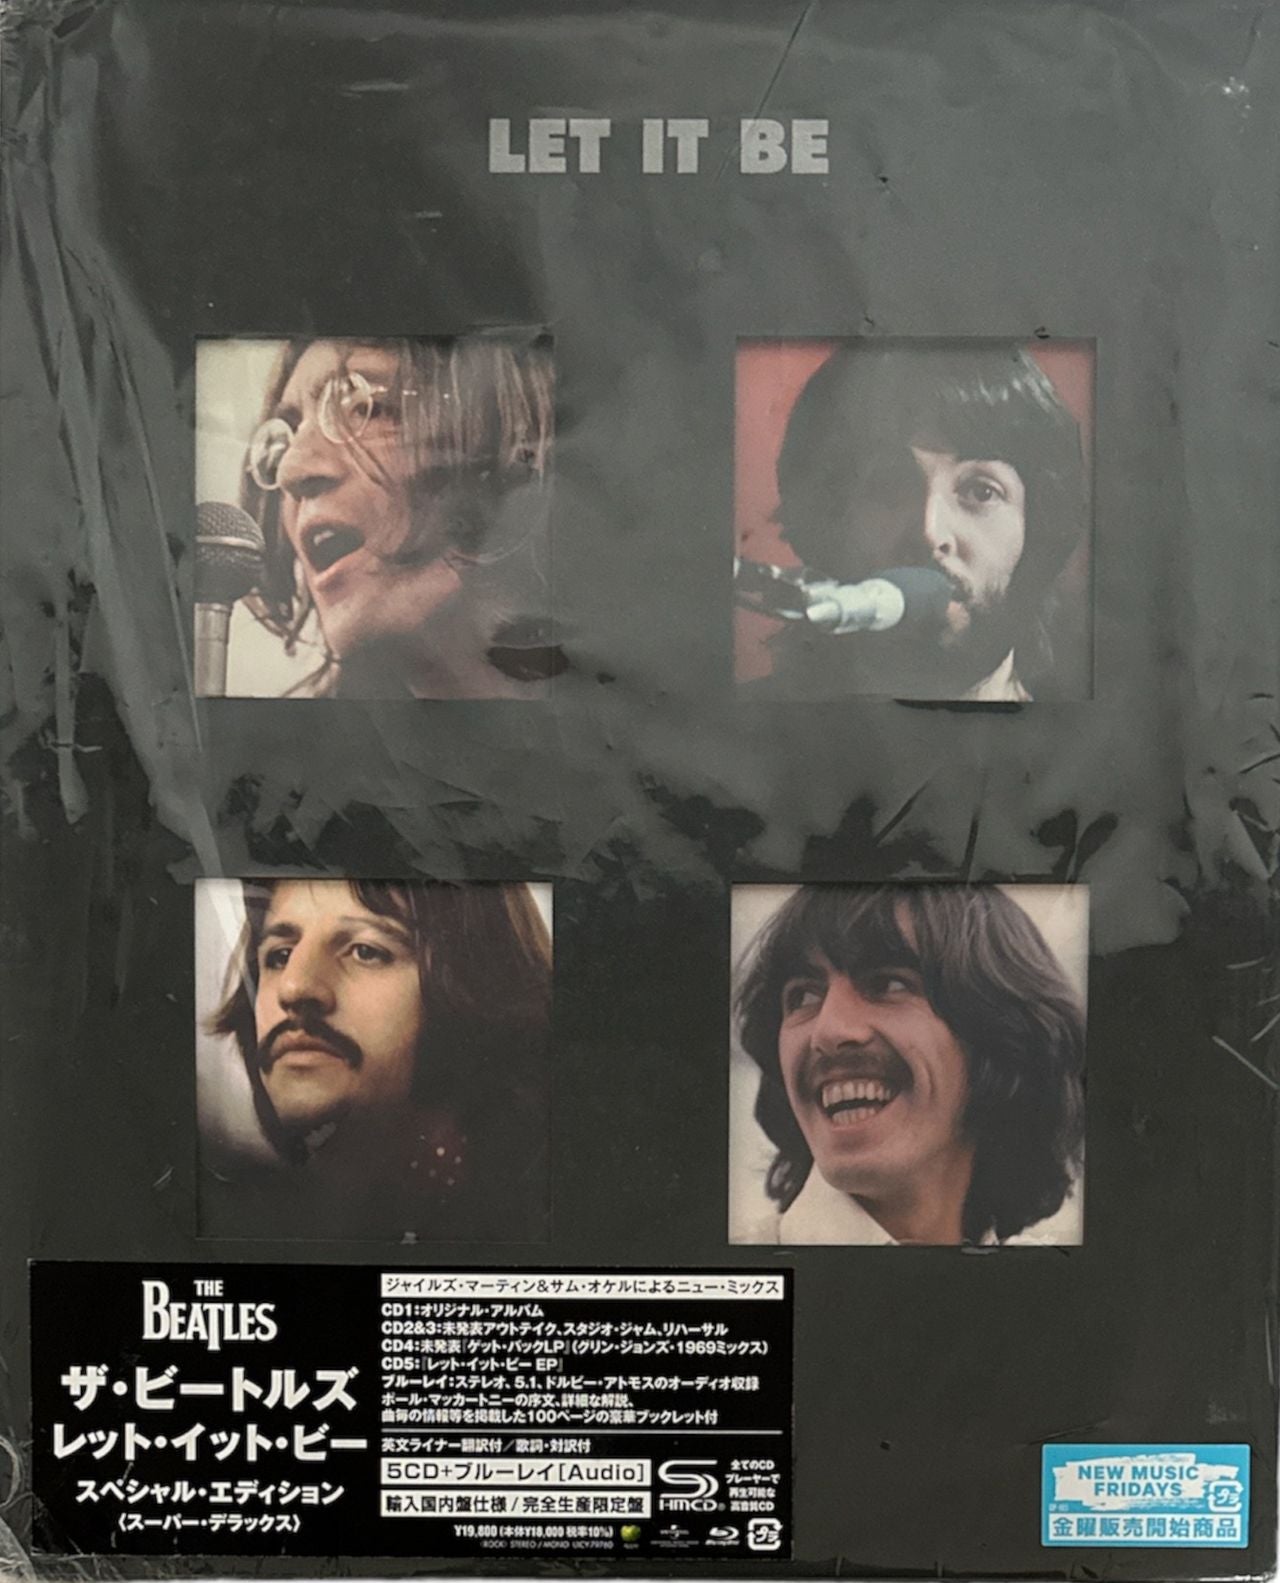 The Beatles Let It Be - Super Deluxe 5CD/Blu-ray - Mispress - Shrink  Japanese Cd album box set